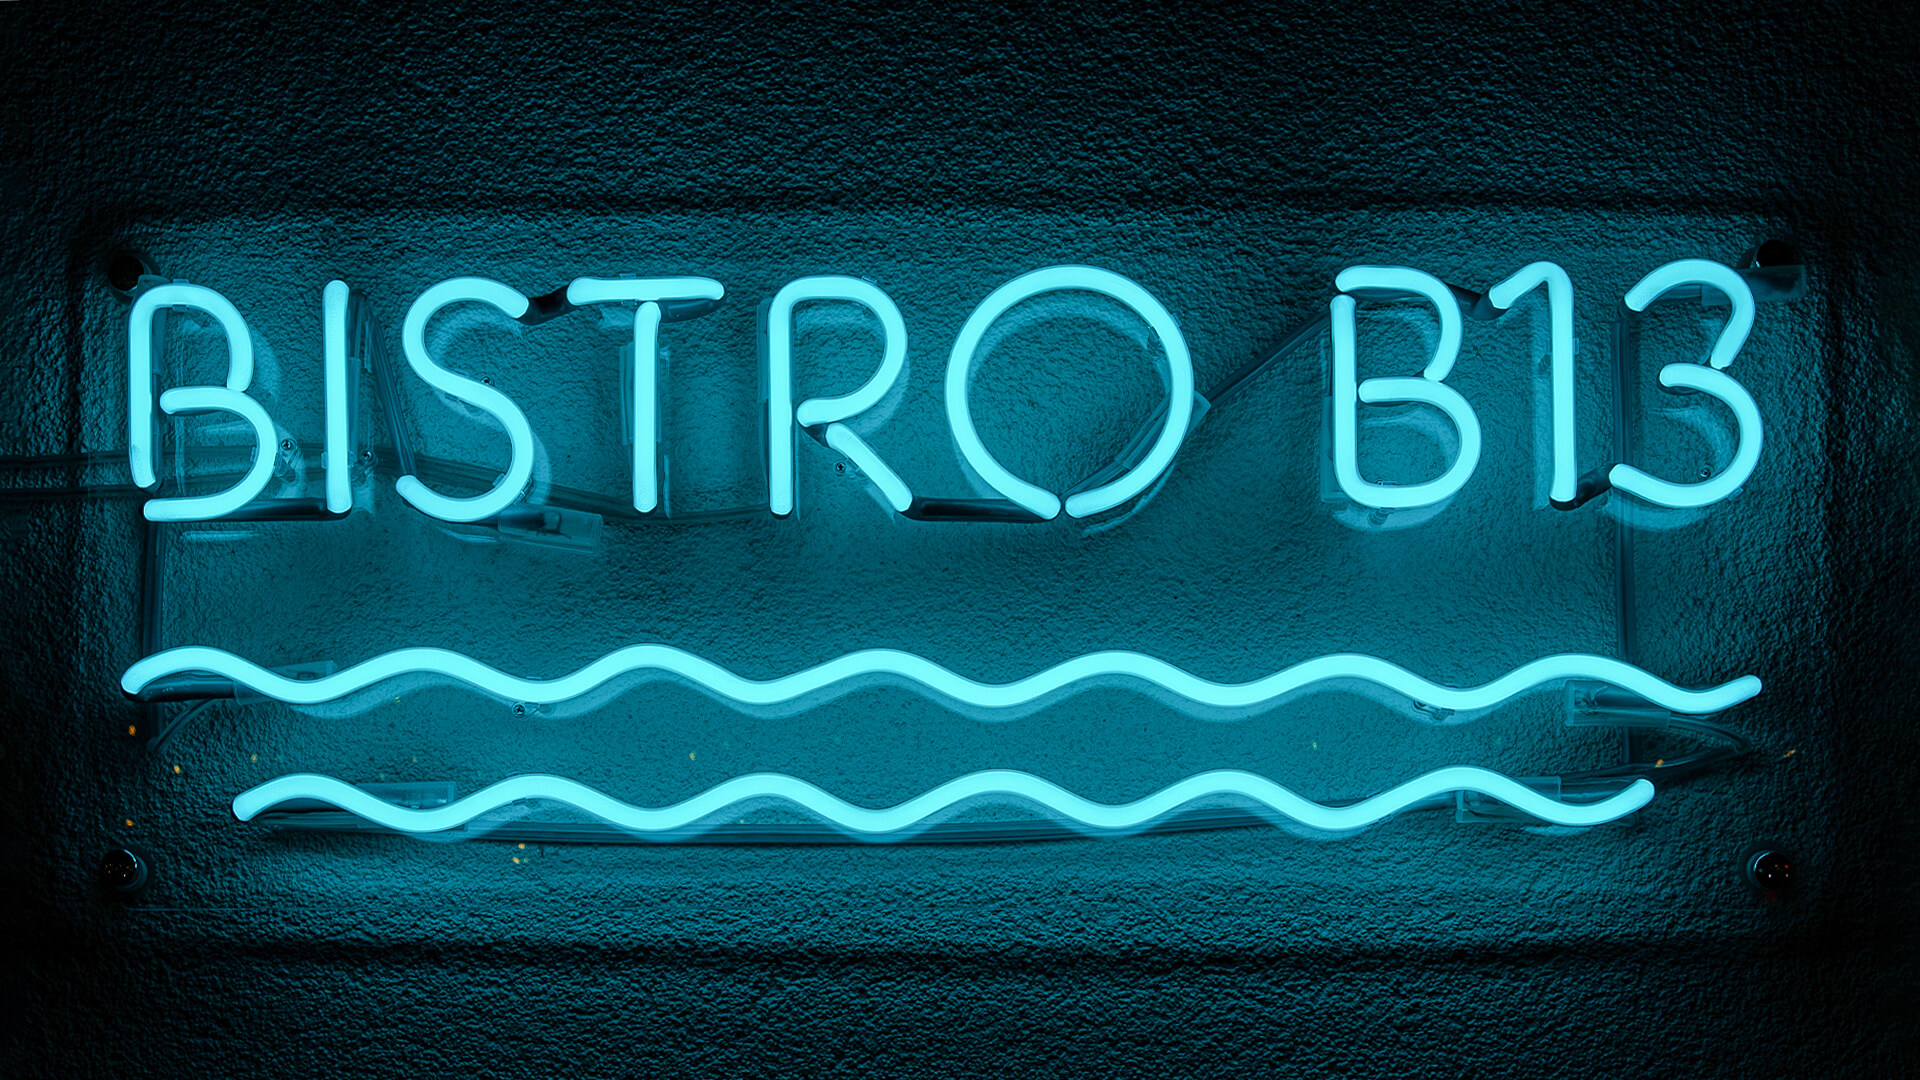 Bistro B13 - Bistro Neonglas türkis.